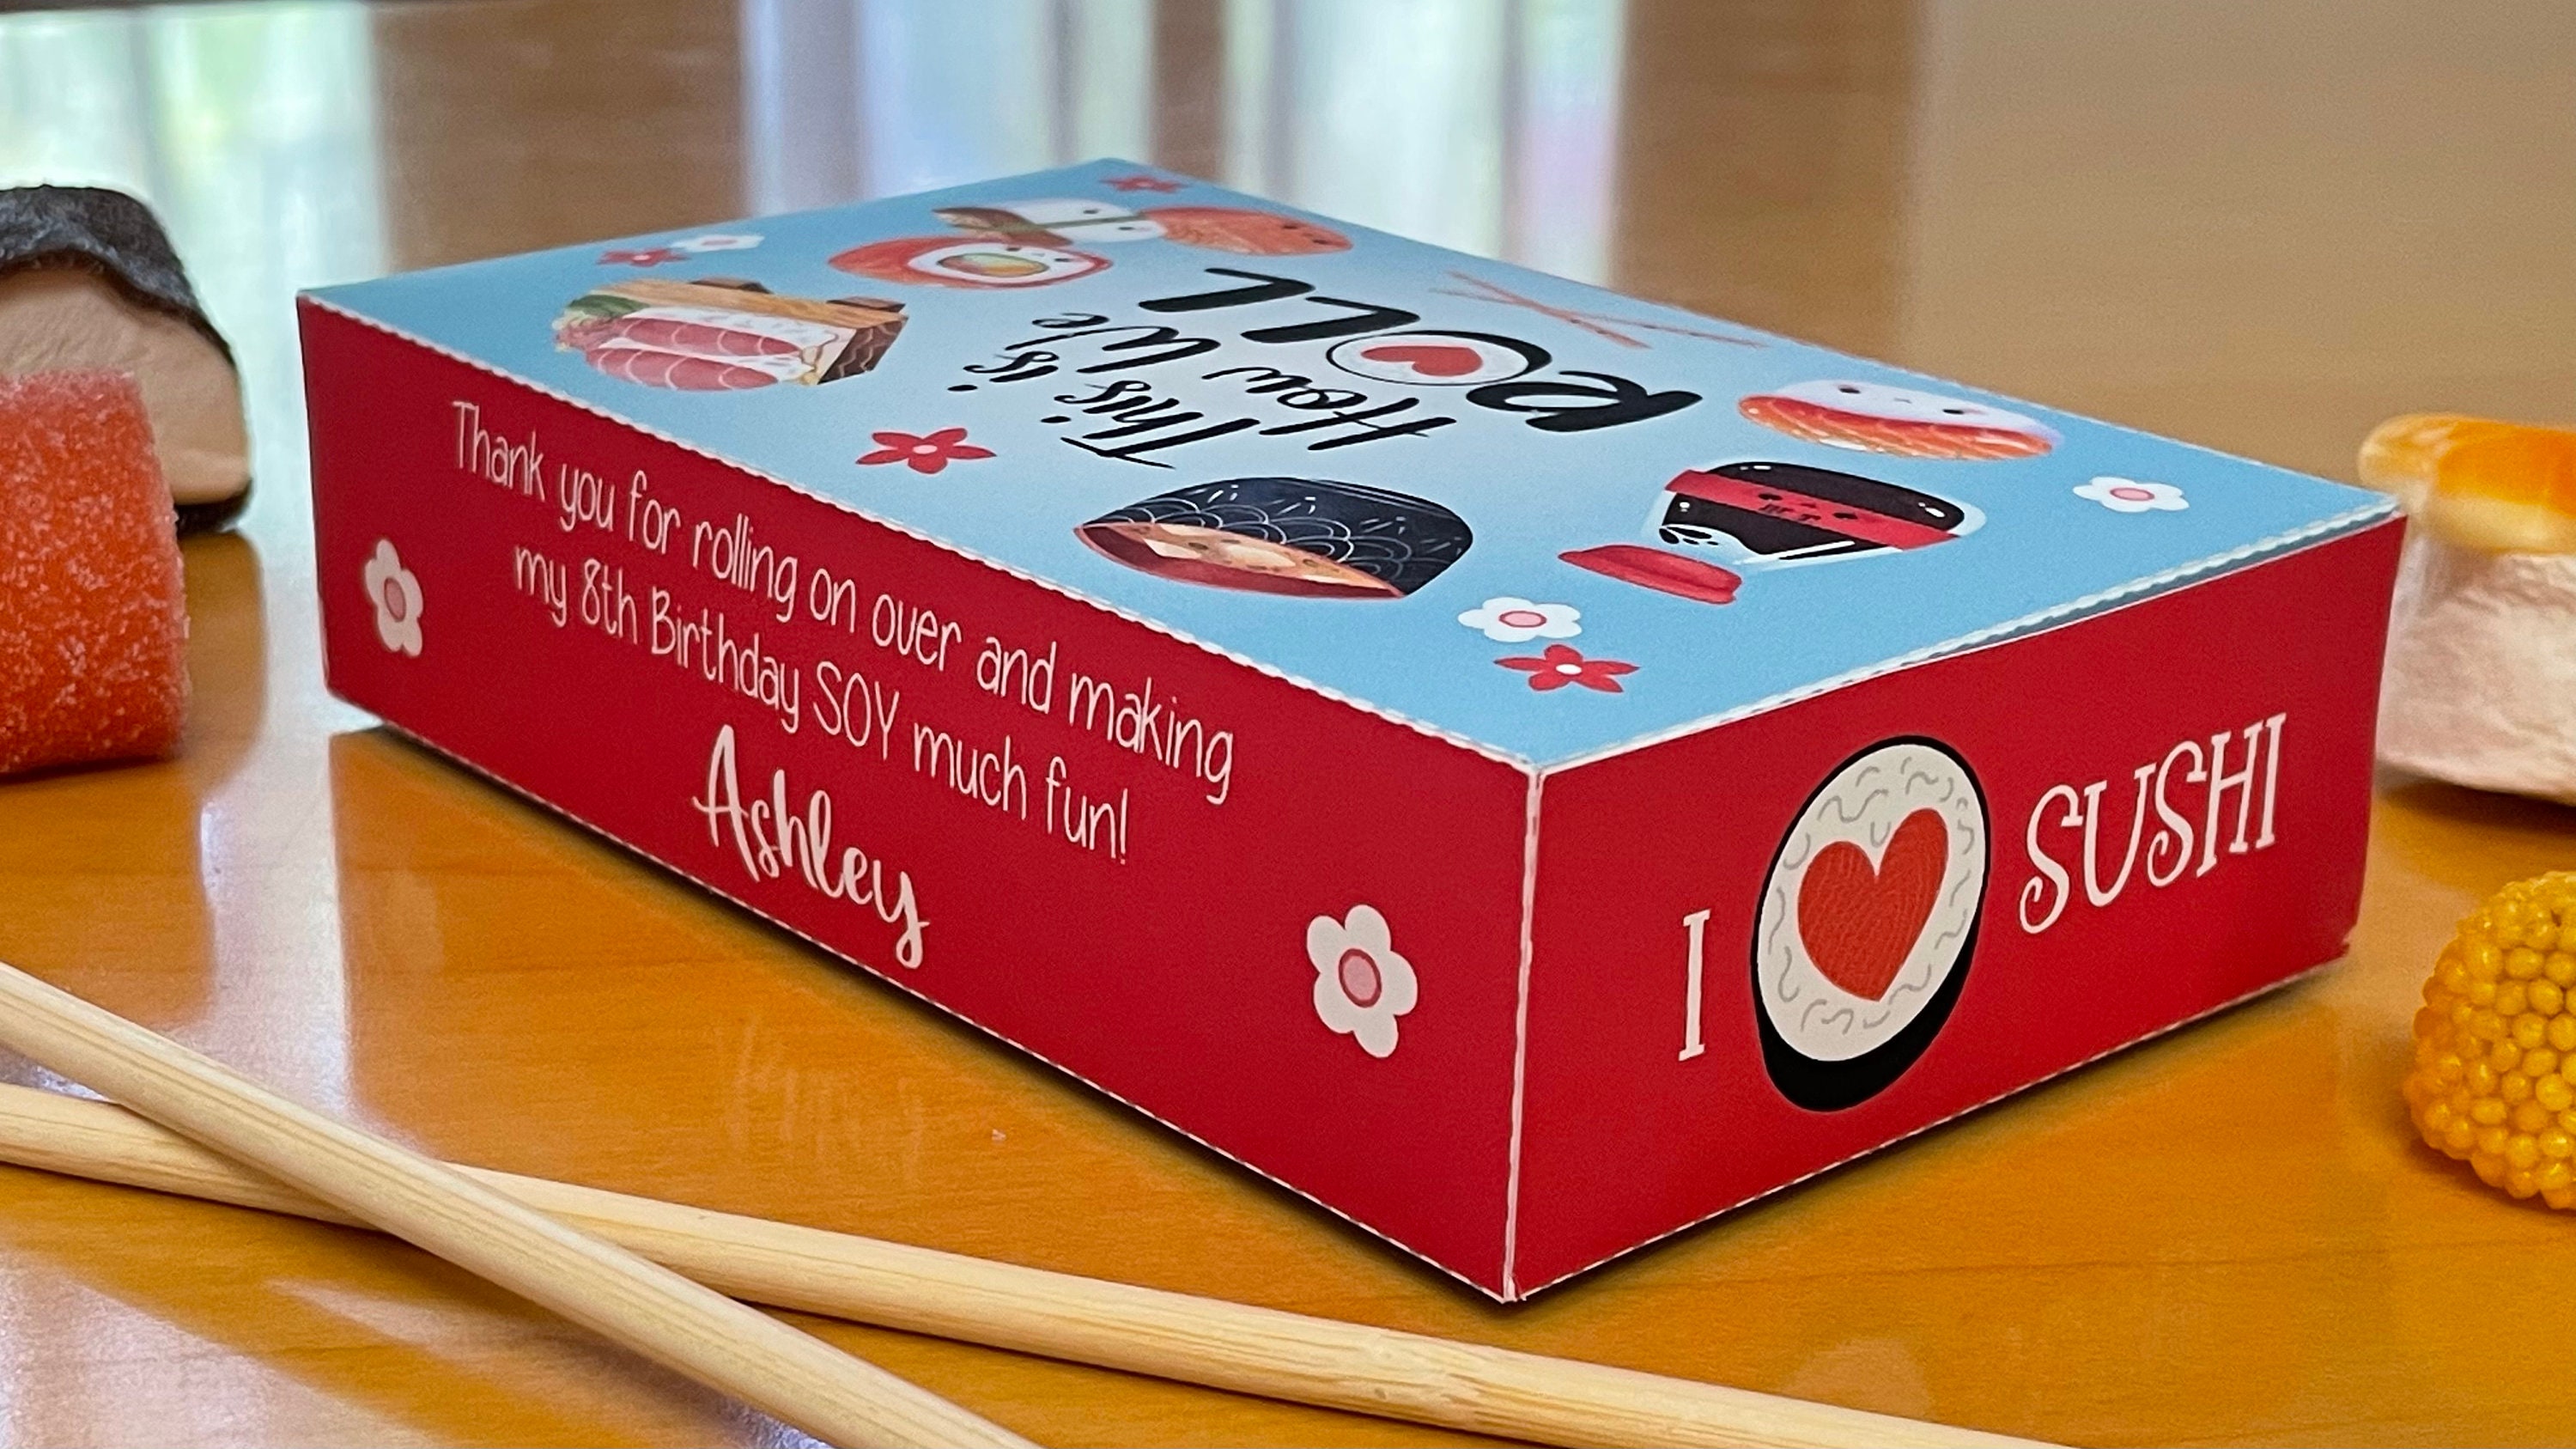 Cute cute Sushi gift box : 𝙏𝙨𝙪𝙢 𝙏𝙨𝙪𝙢 𝙈𝙞𝙘𝙠𝙚𝙮 🔴 It